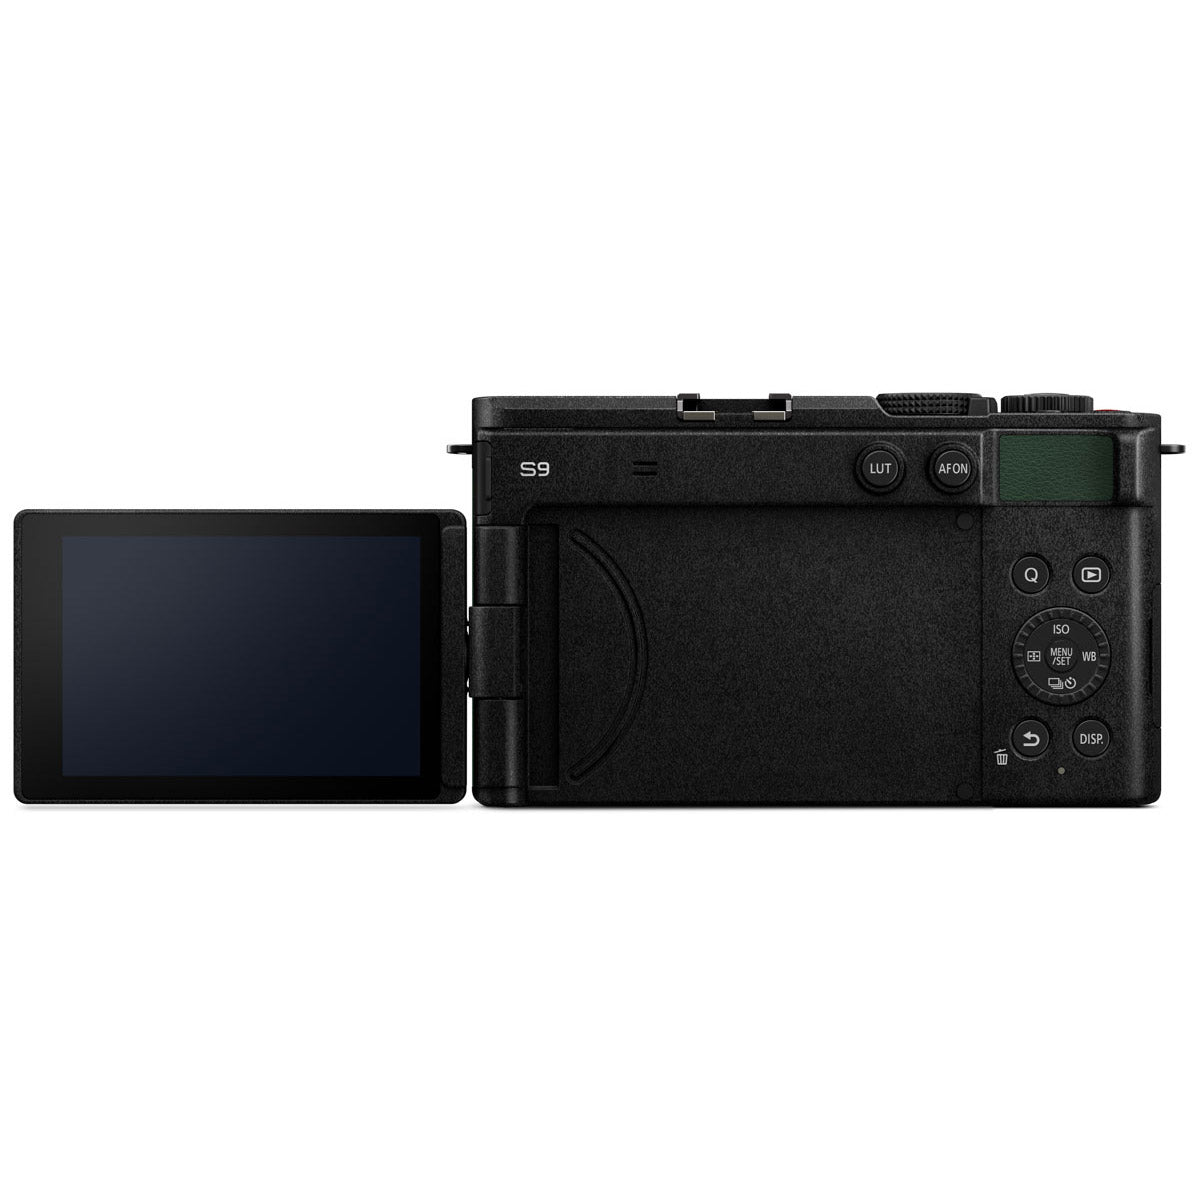 Panasonic Lumix S9 Camera with 20-60mm Lens Kit - Green